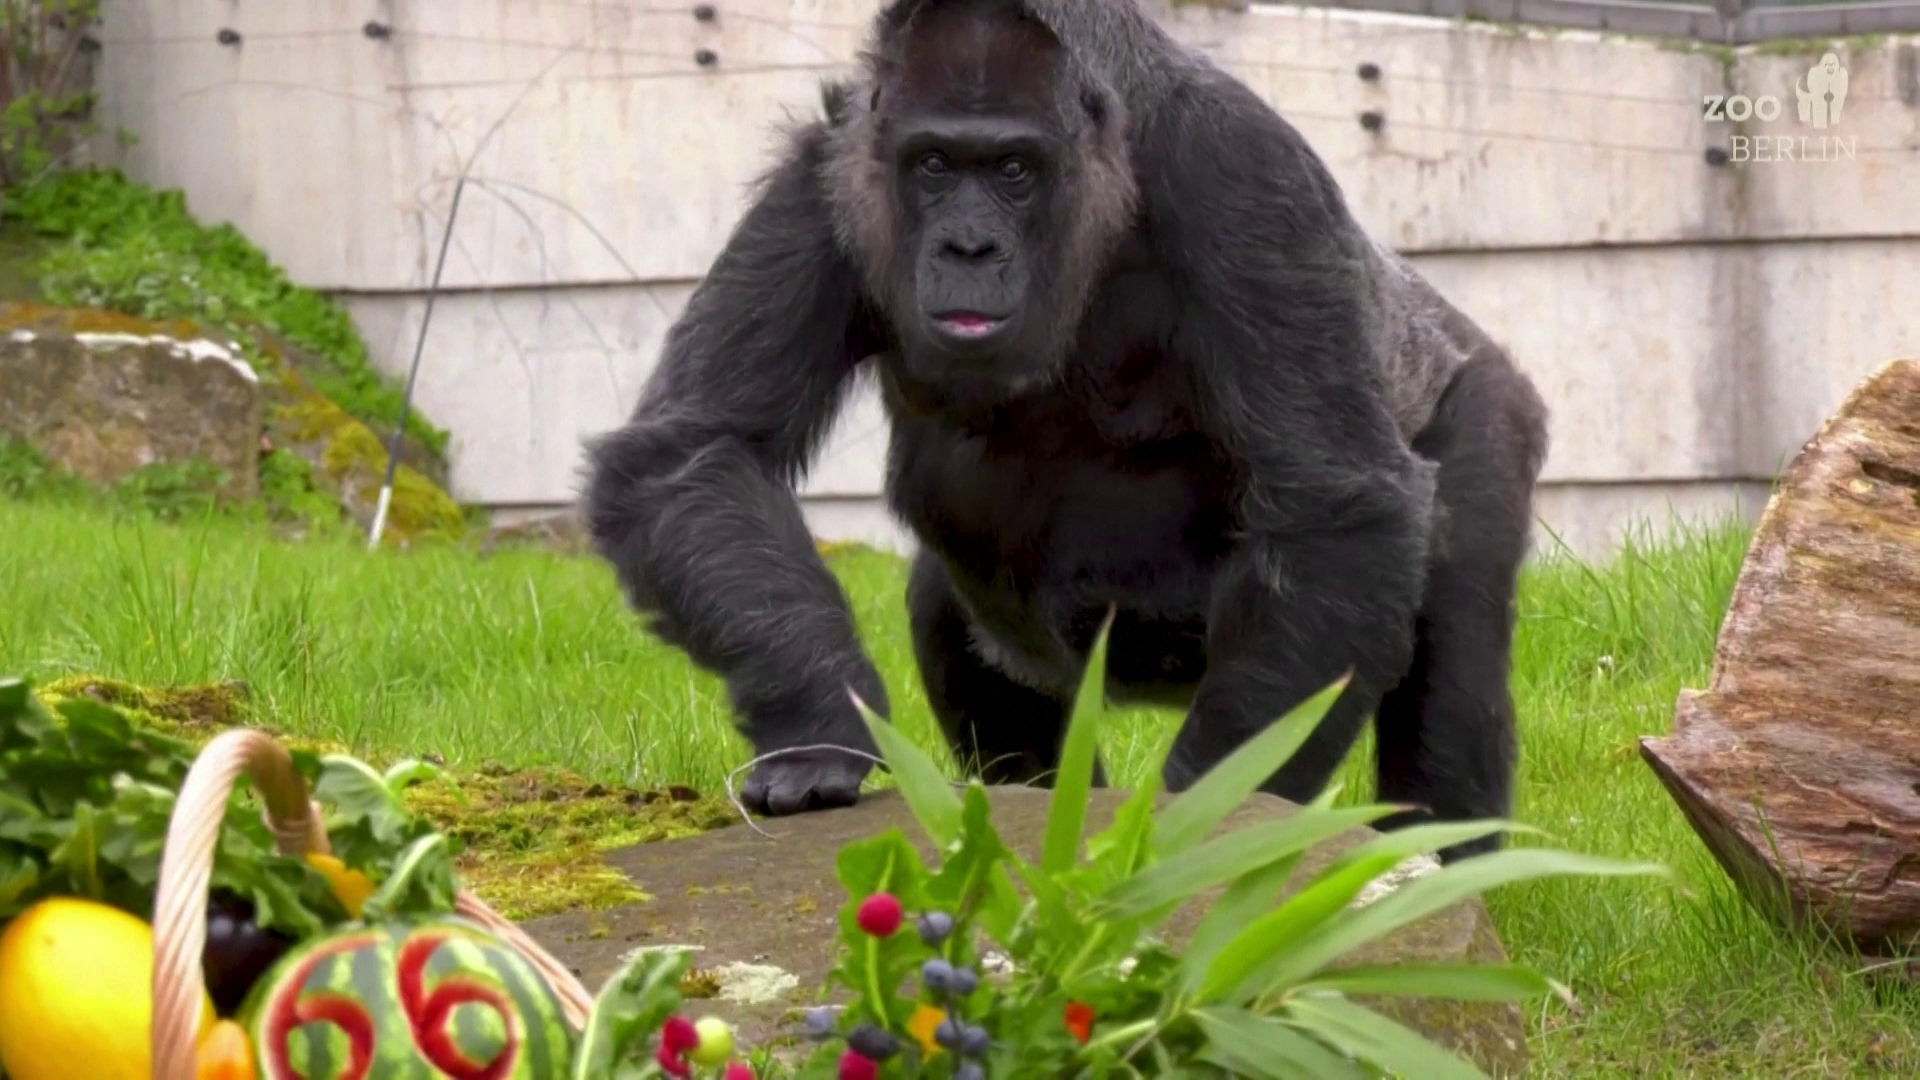 66 éves lett a világ legöregebb gorillája